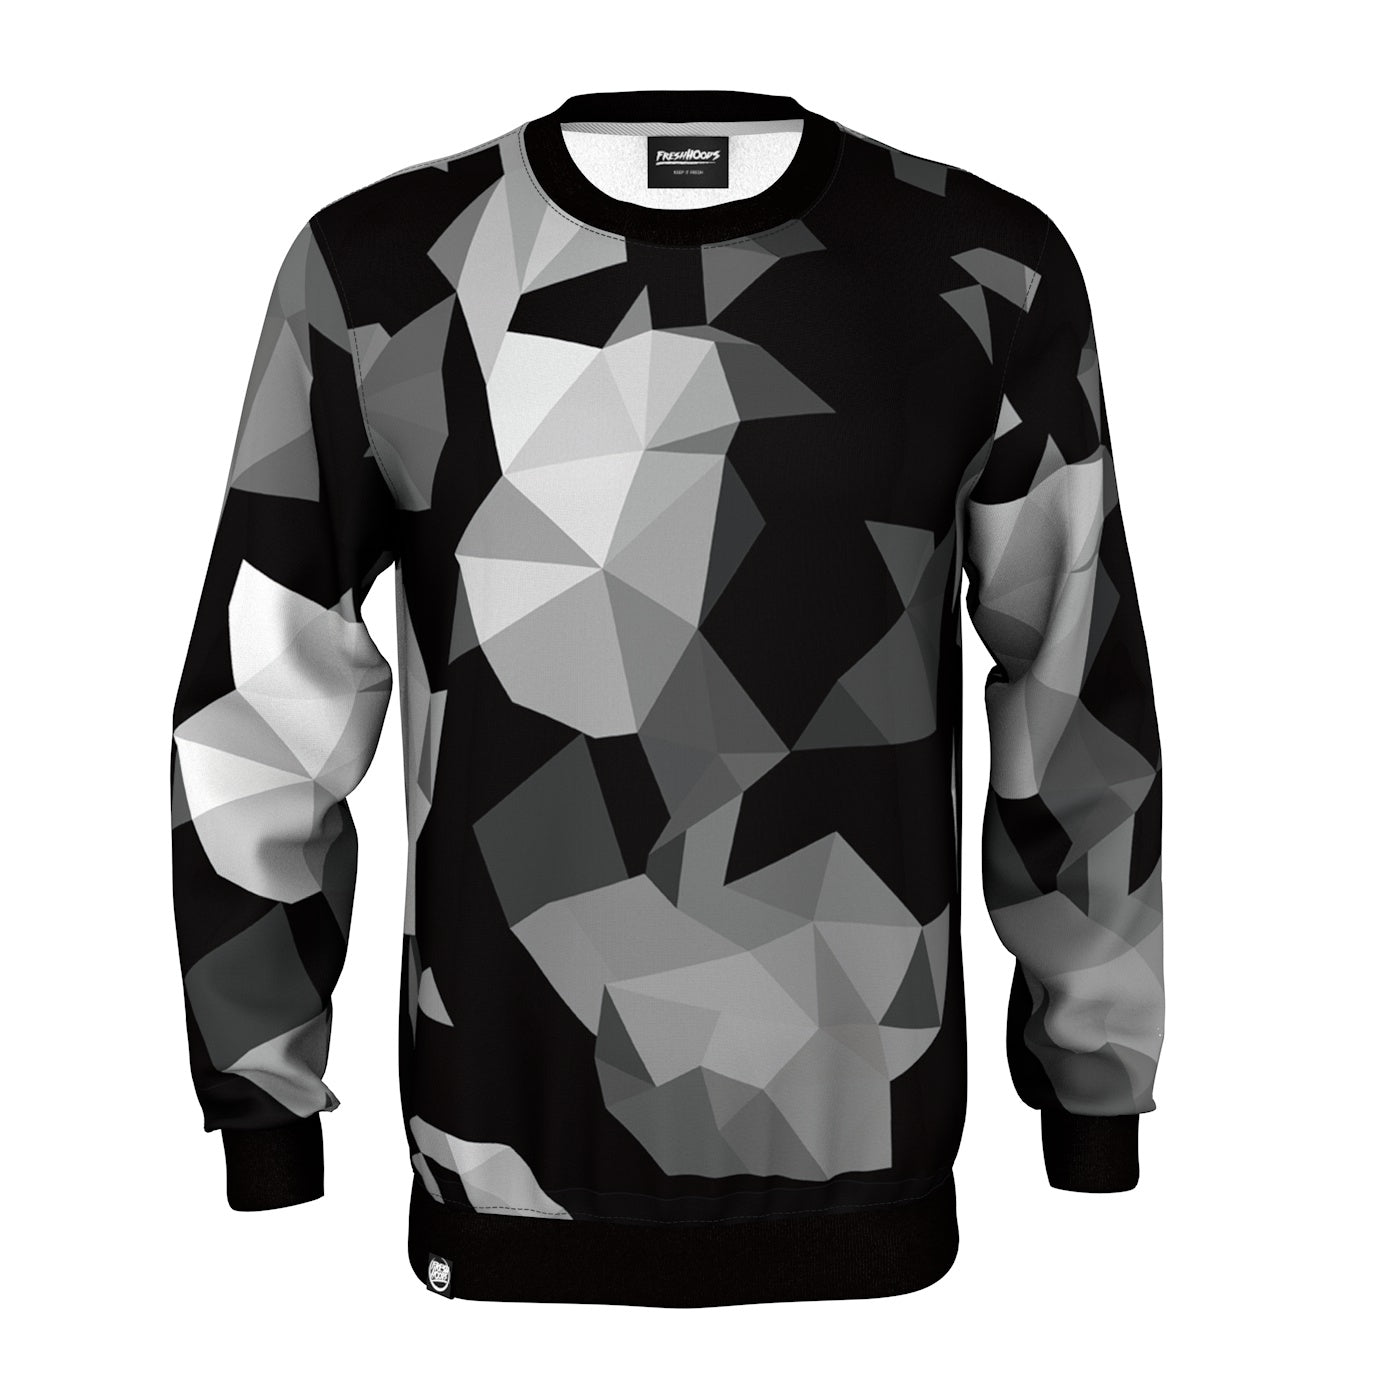 Cubes Black Sweatshirt